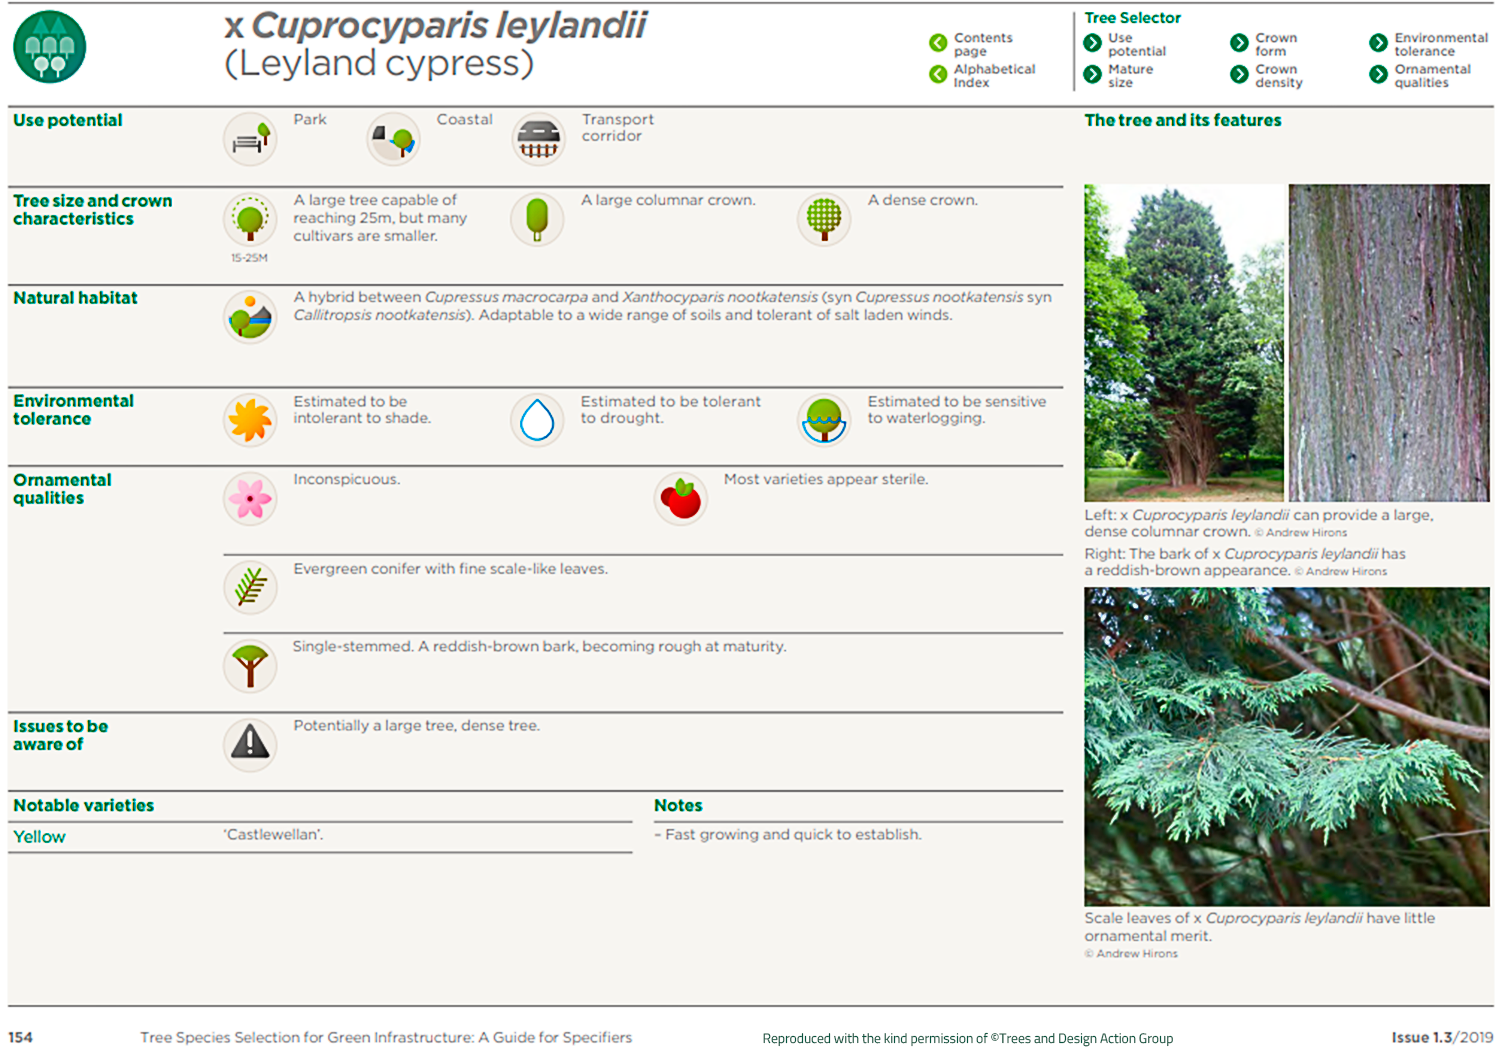 Leyland cypress (X Cuprocyparis leylandii)